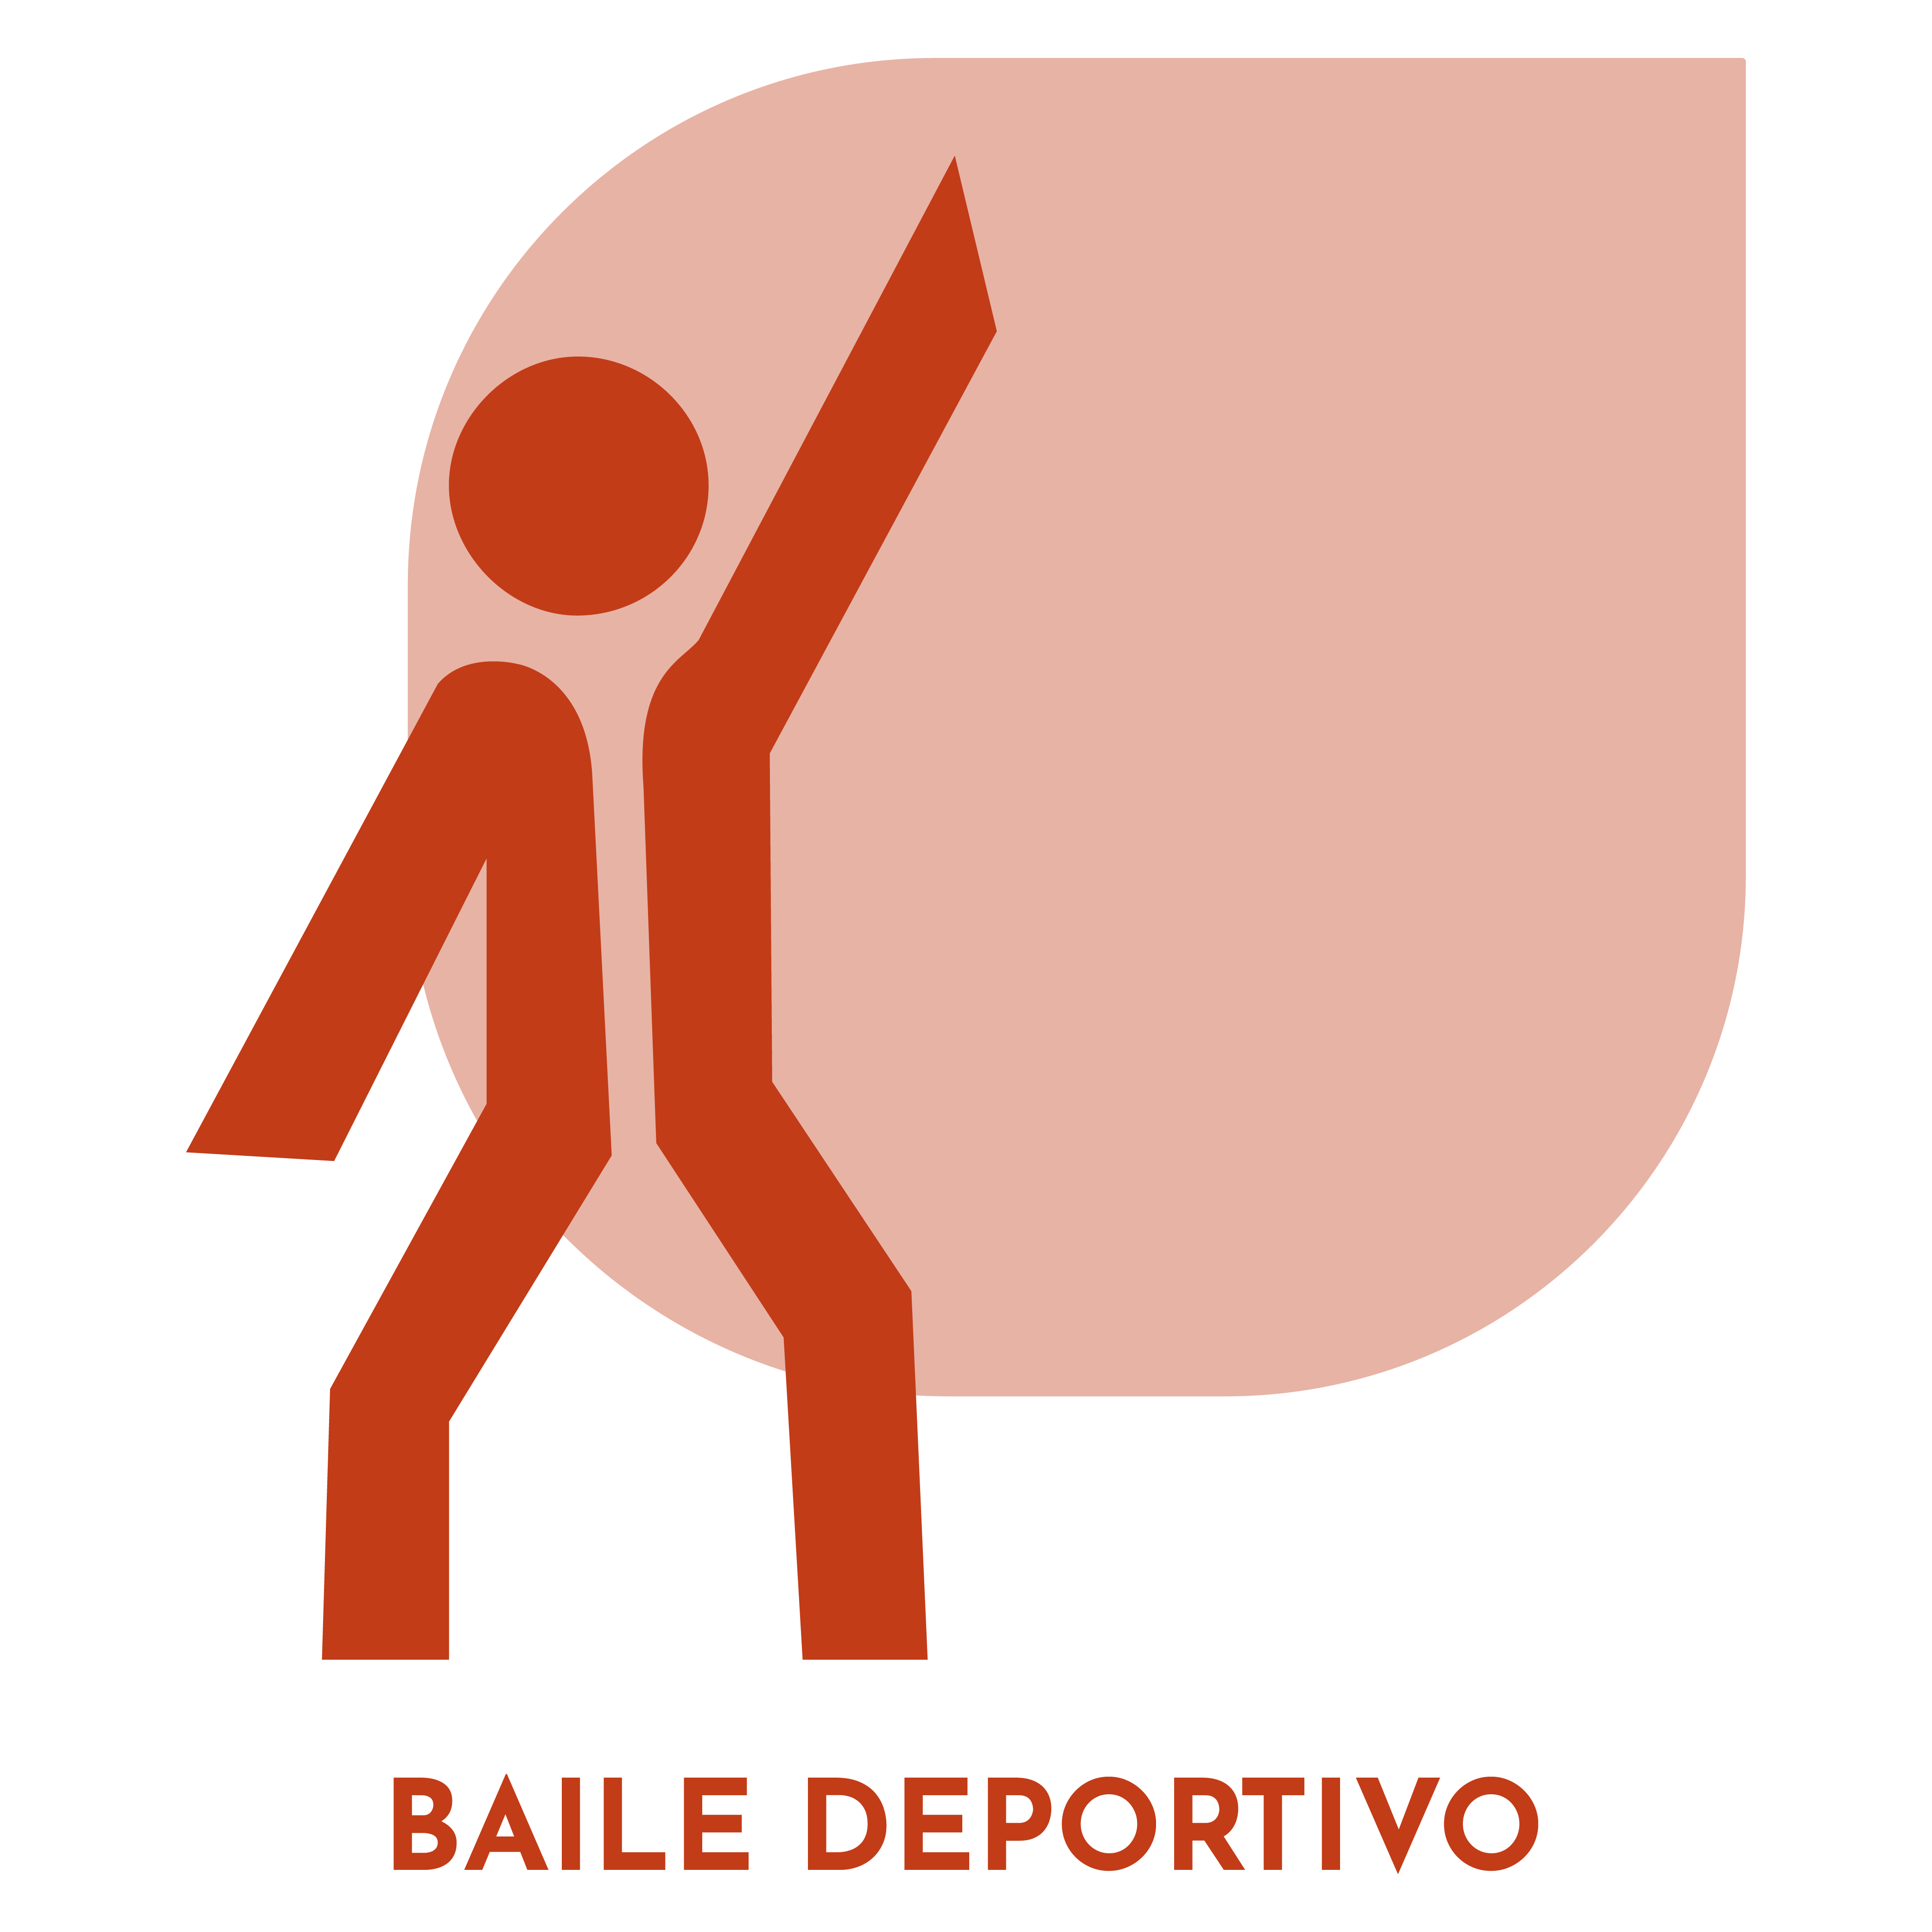 BAILE DEPORTIVO